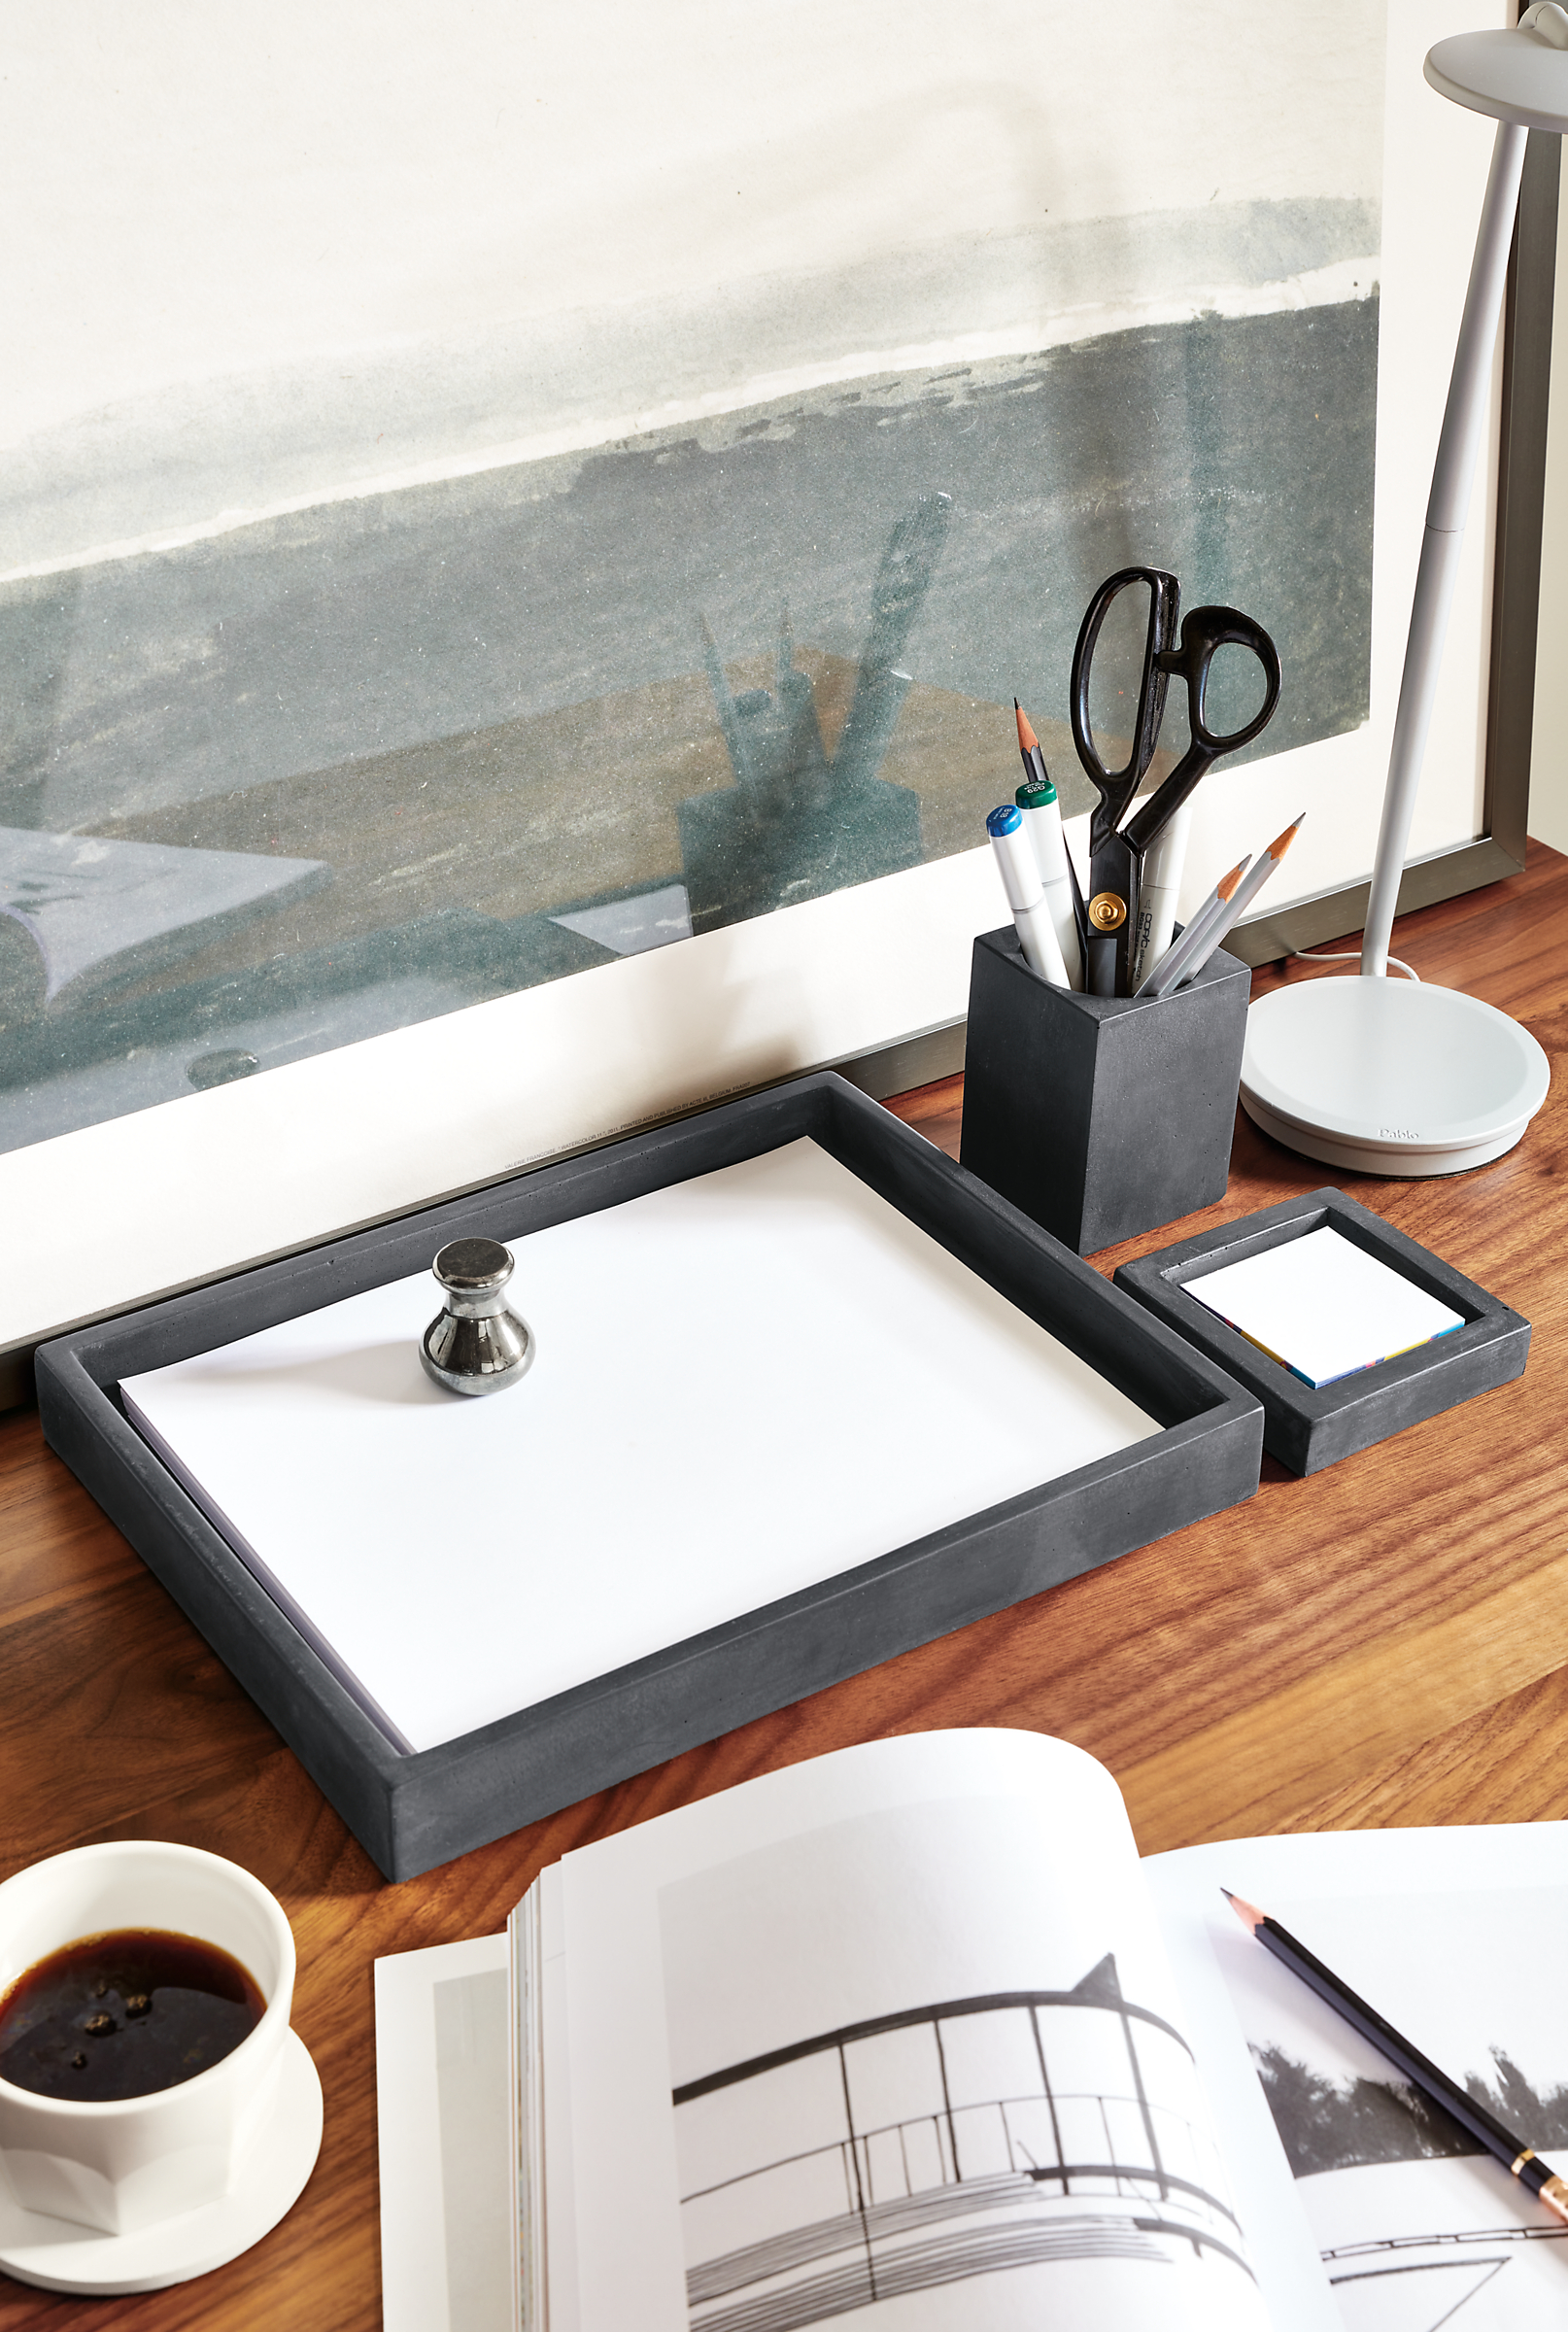 Saco Desktop Accessories - Modern Office Furniture - Room & Board